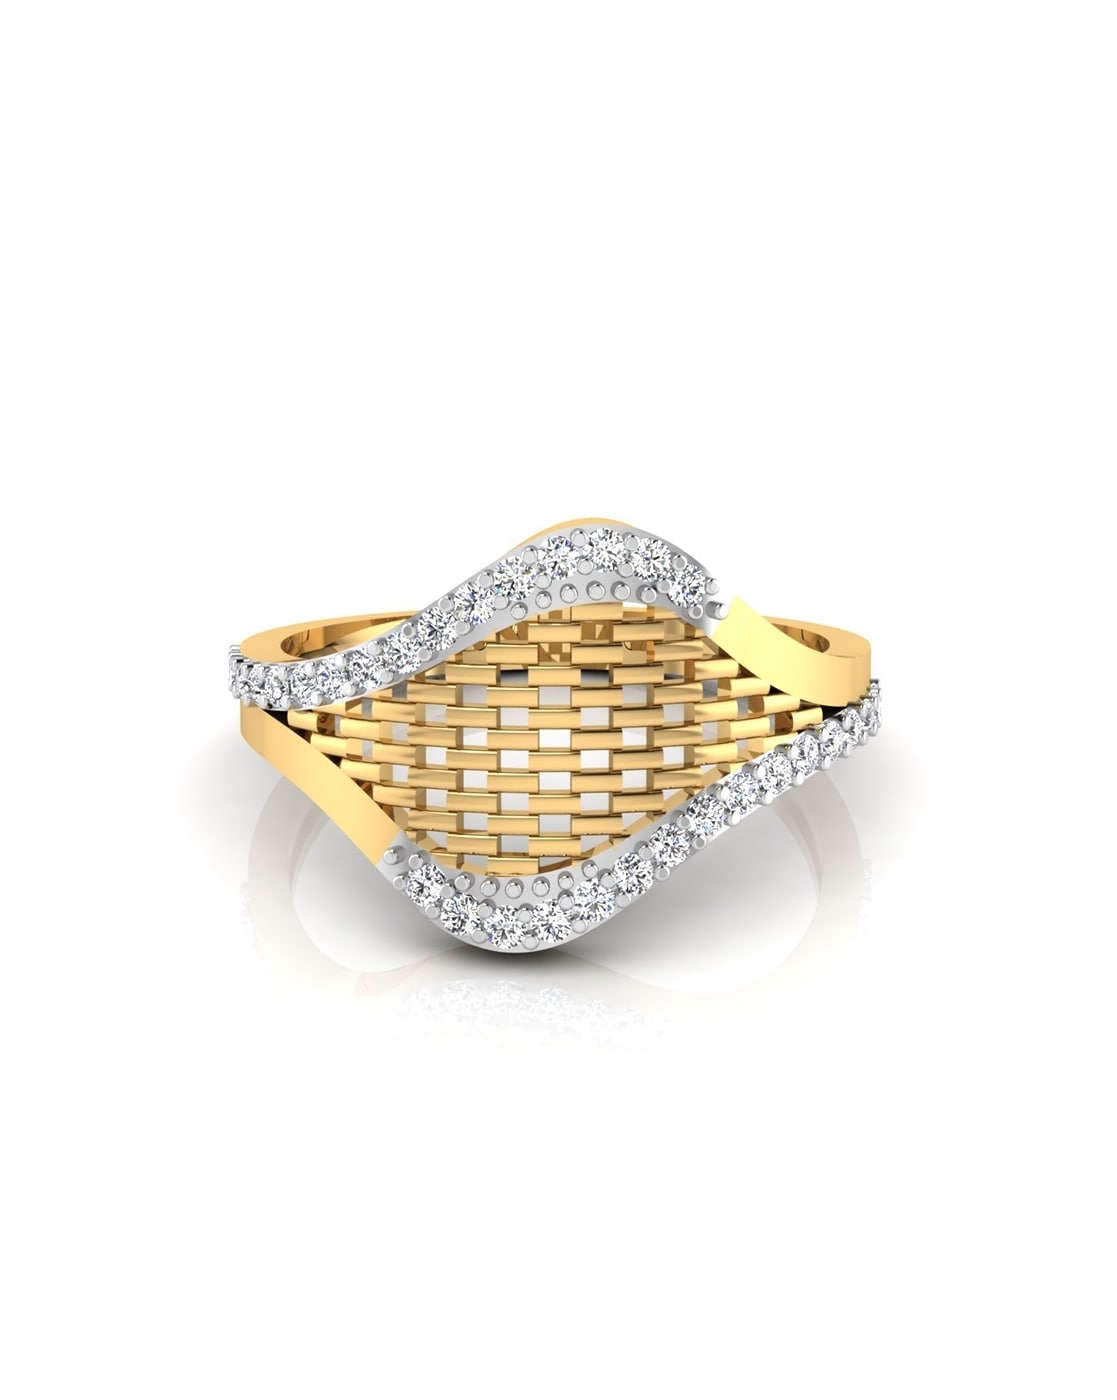 Engagement Rings For Women | Womens engagement rings, Wedding rings  engagement, Engagement rings